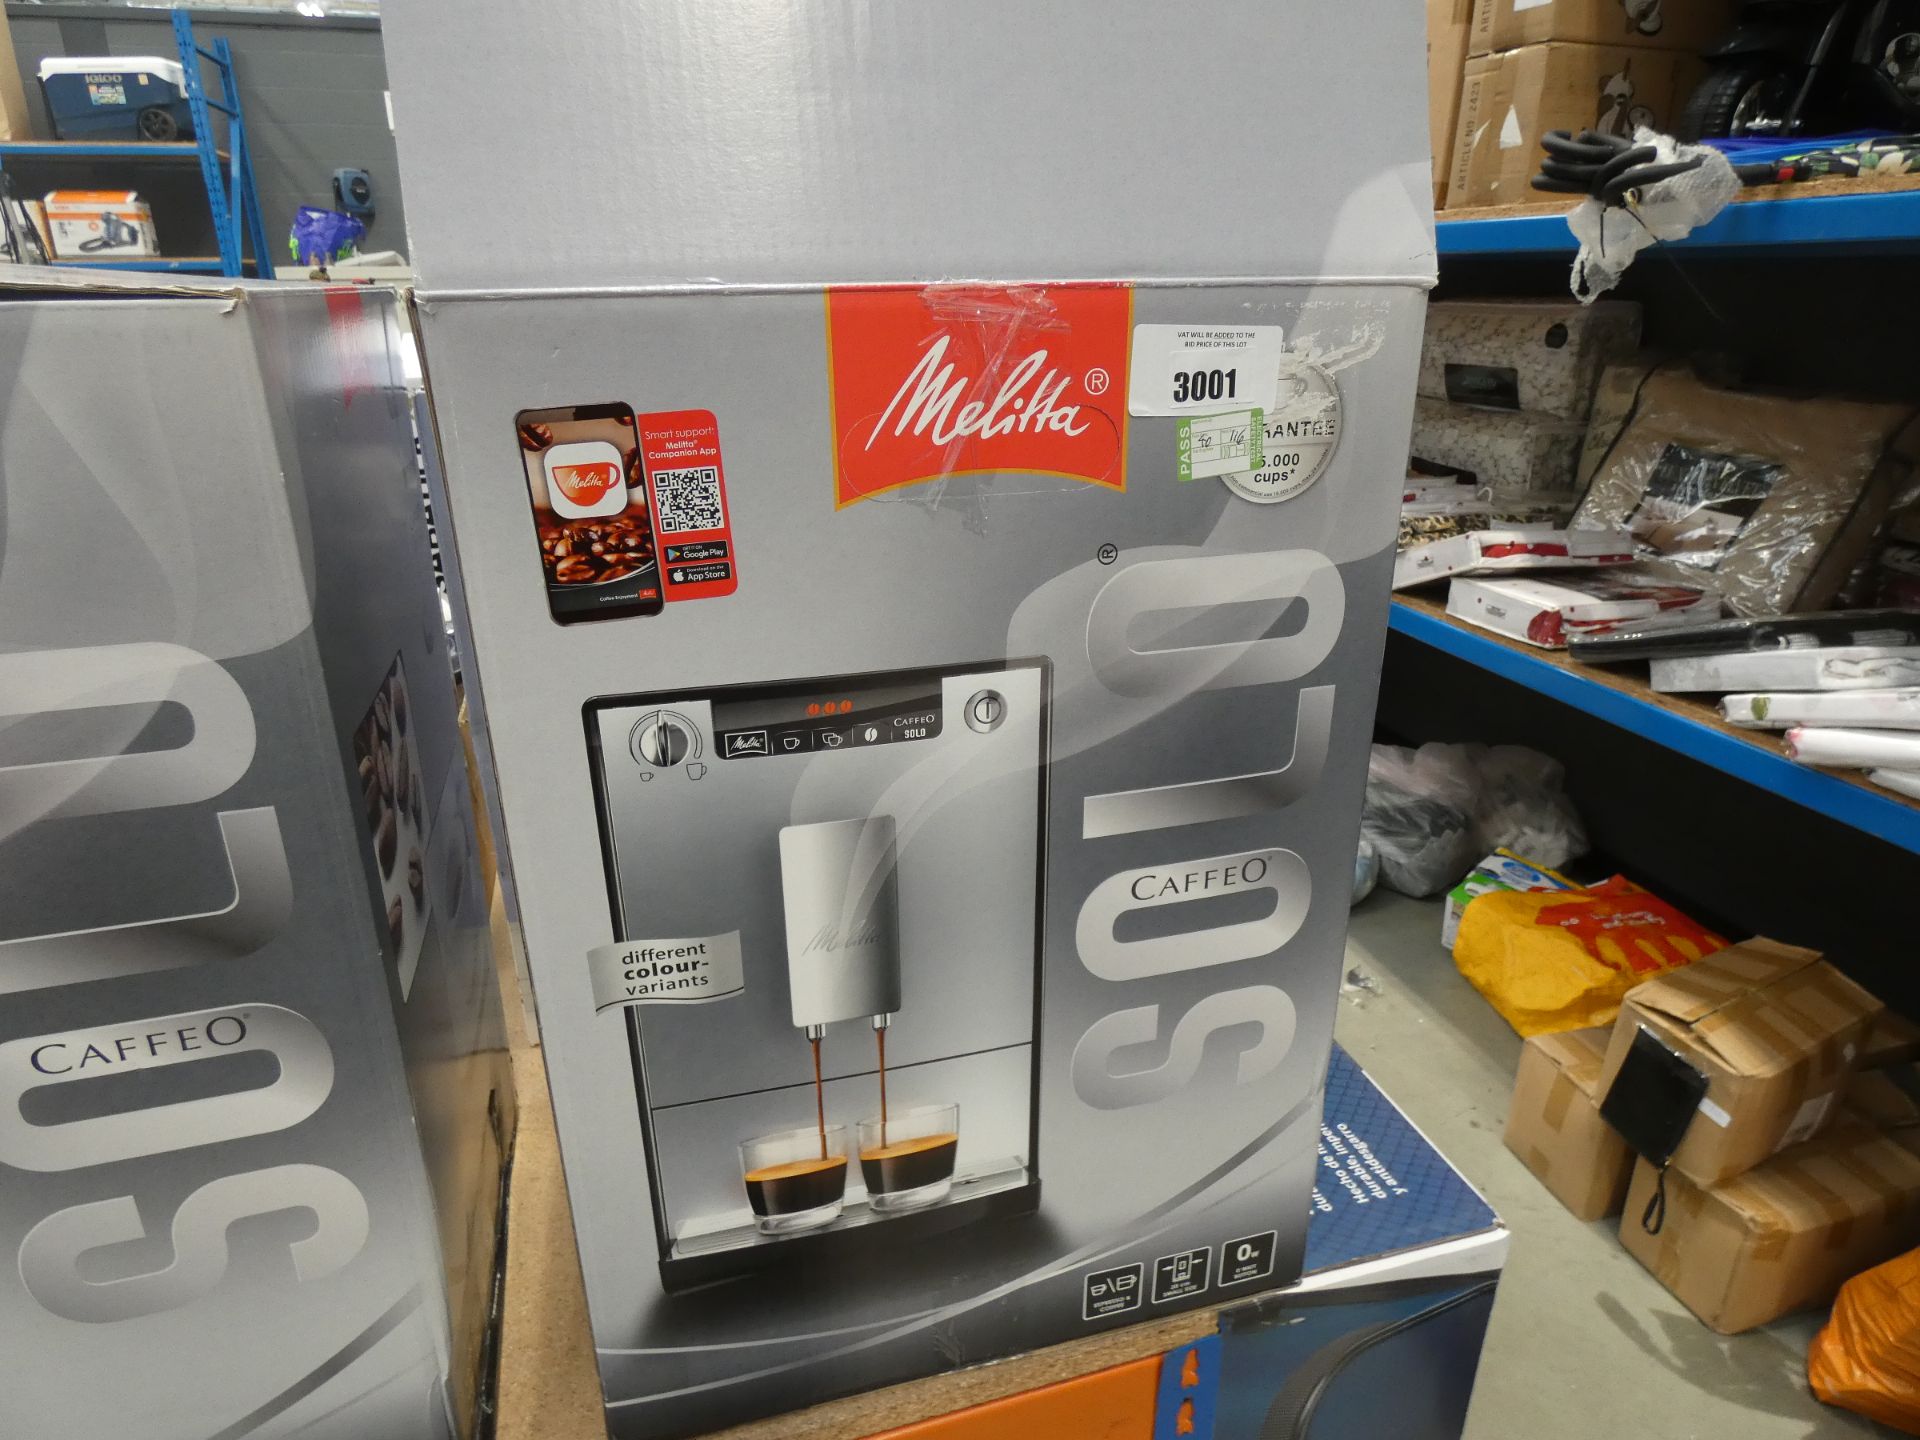 (116) Melitta espresso coffee dispenser